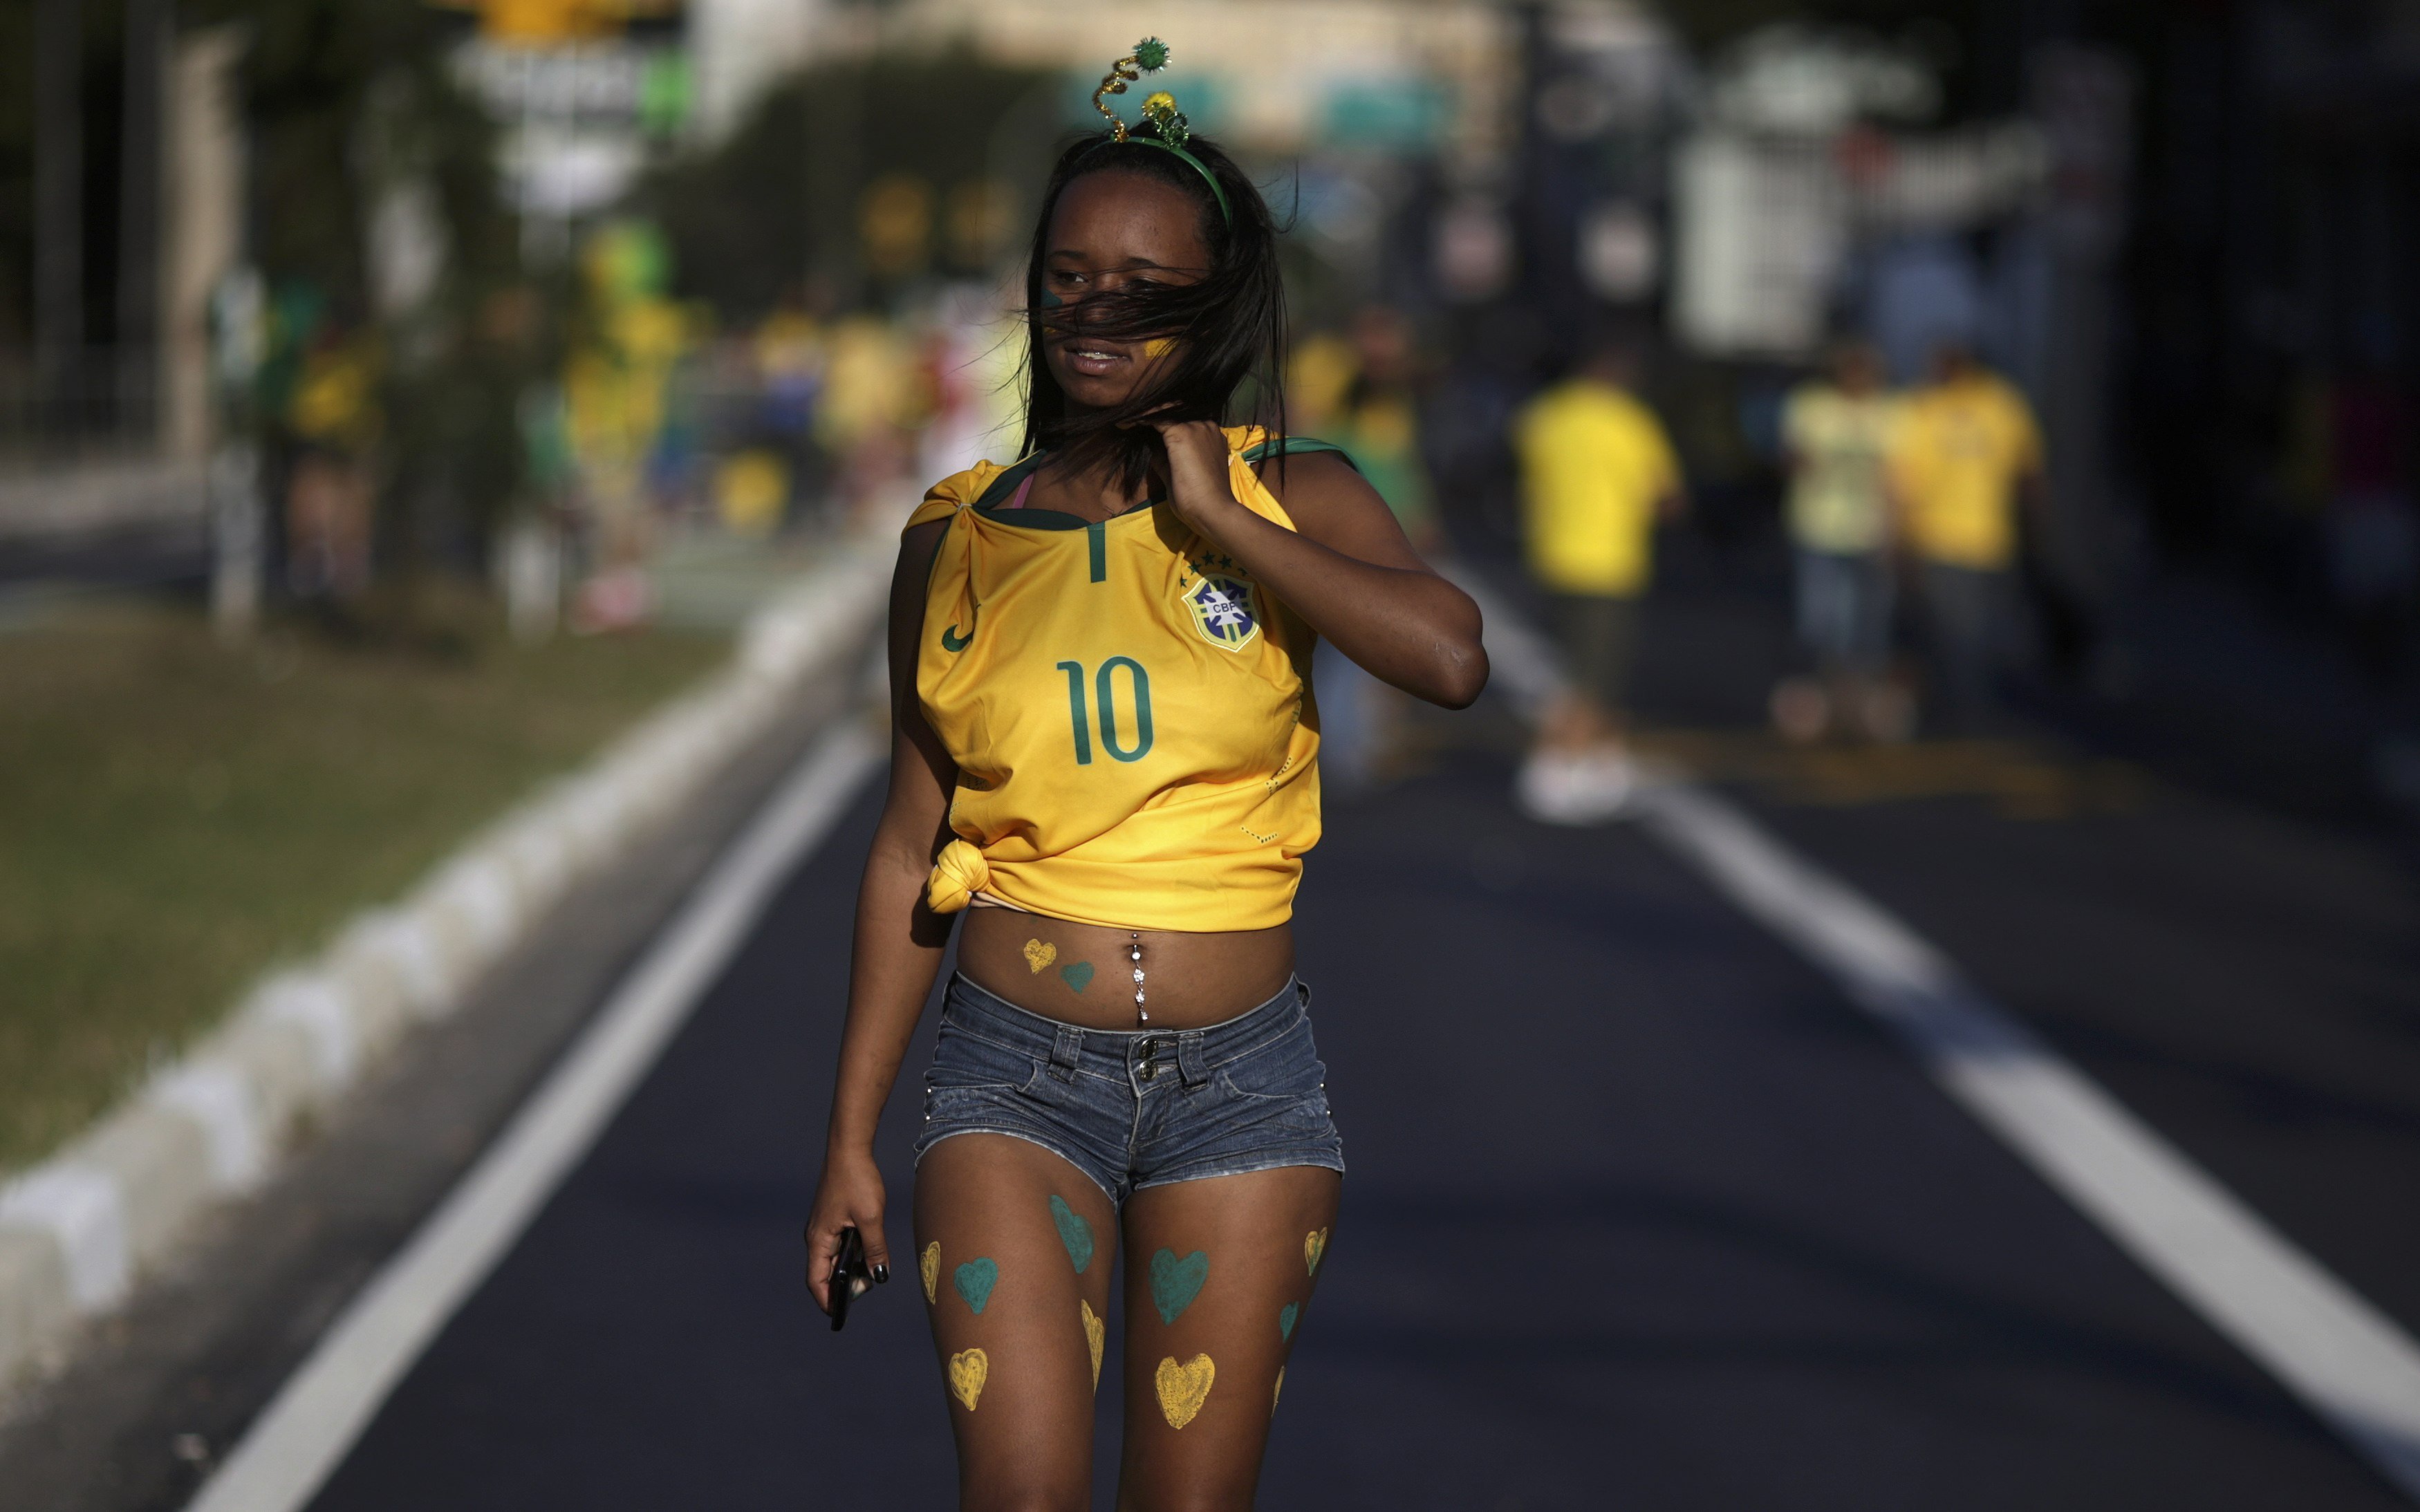 A brazilian soccer fan walks on the street near the Corinthians Arena ahead the 2014 World Cup match between Brazil and Croatia in Sao Paulo on June 12, 2014.